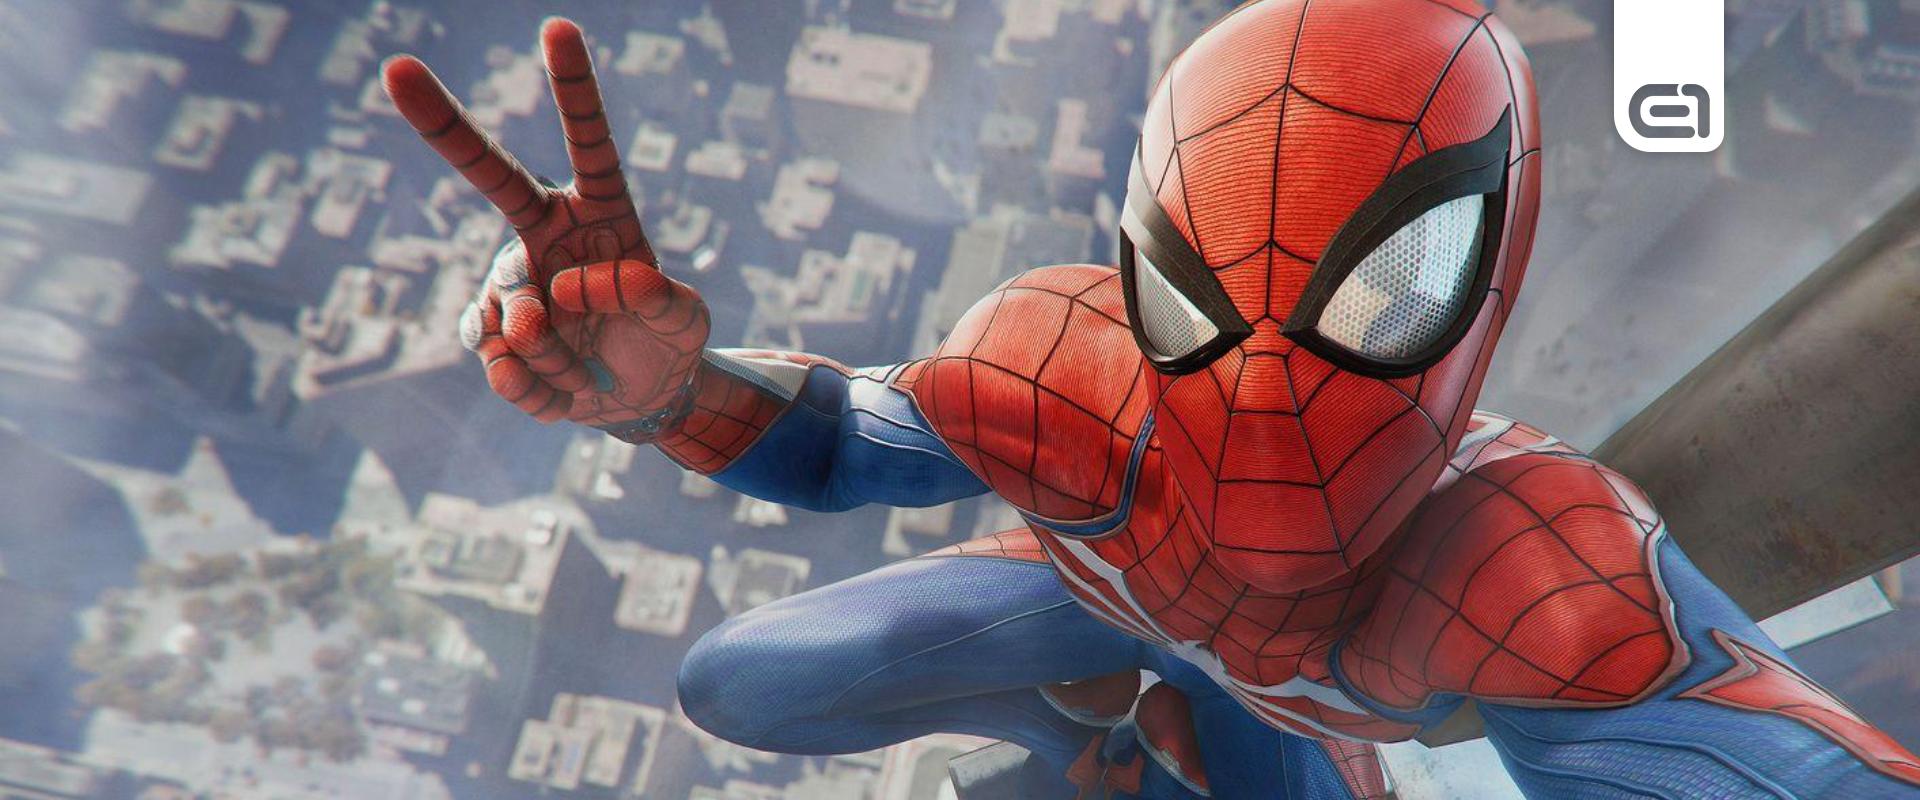 Spider-Man 2, Wolverine, Ghost of Tsushima 2 - Óriási PlayStation Showcase érkezhet